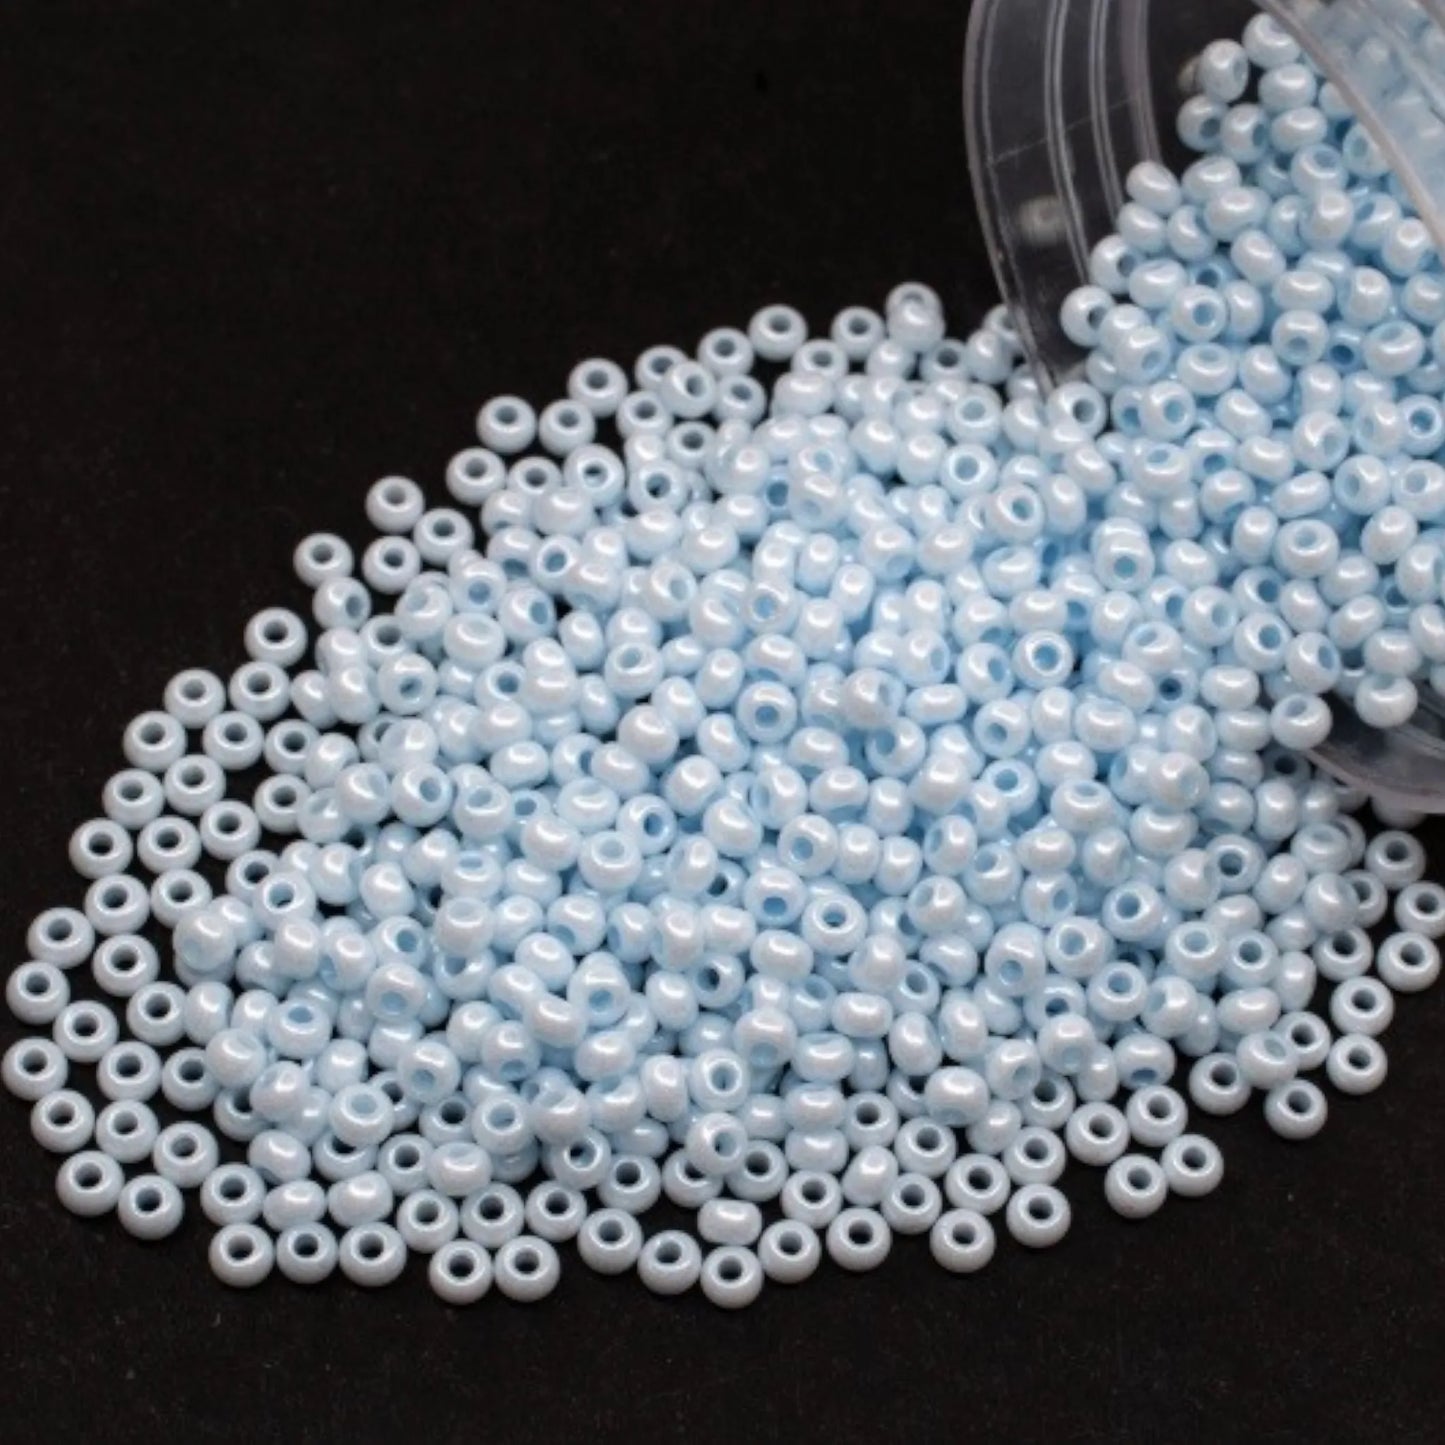 16236 Czech seed beads PRECIOSA round 10/0 light blue. Chalk - Terra Pearl.